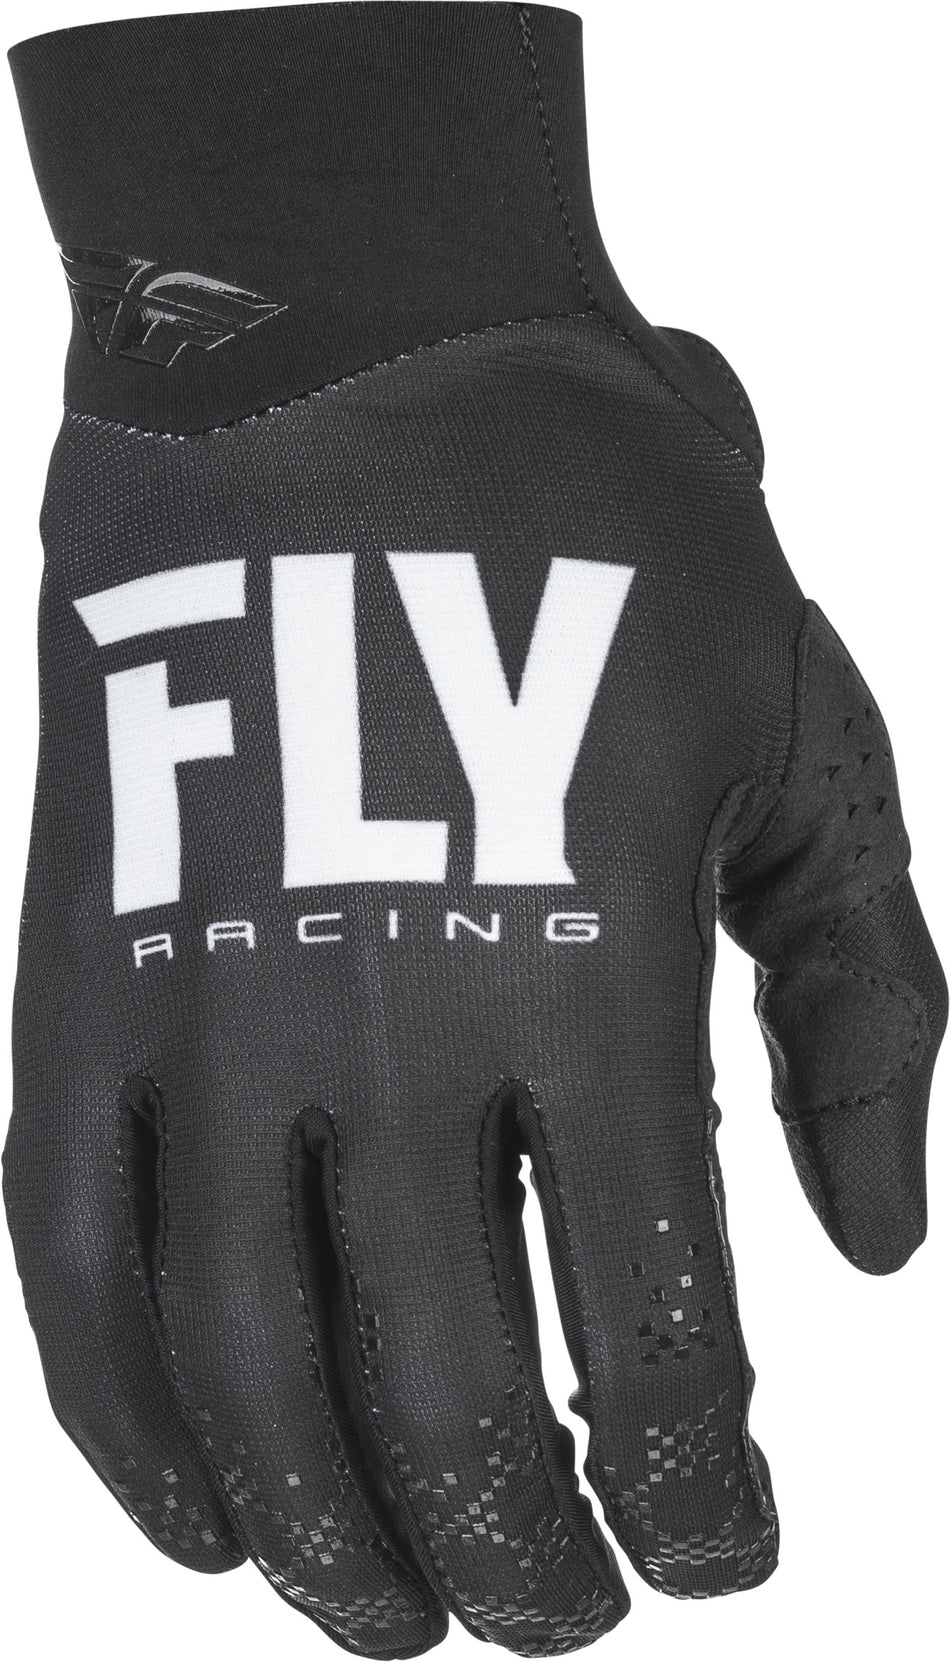 FLY RACING Pro Lite Gloves Black Sz 11 371-81011